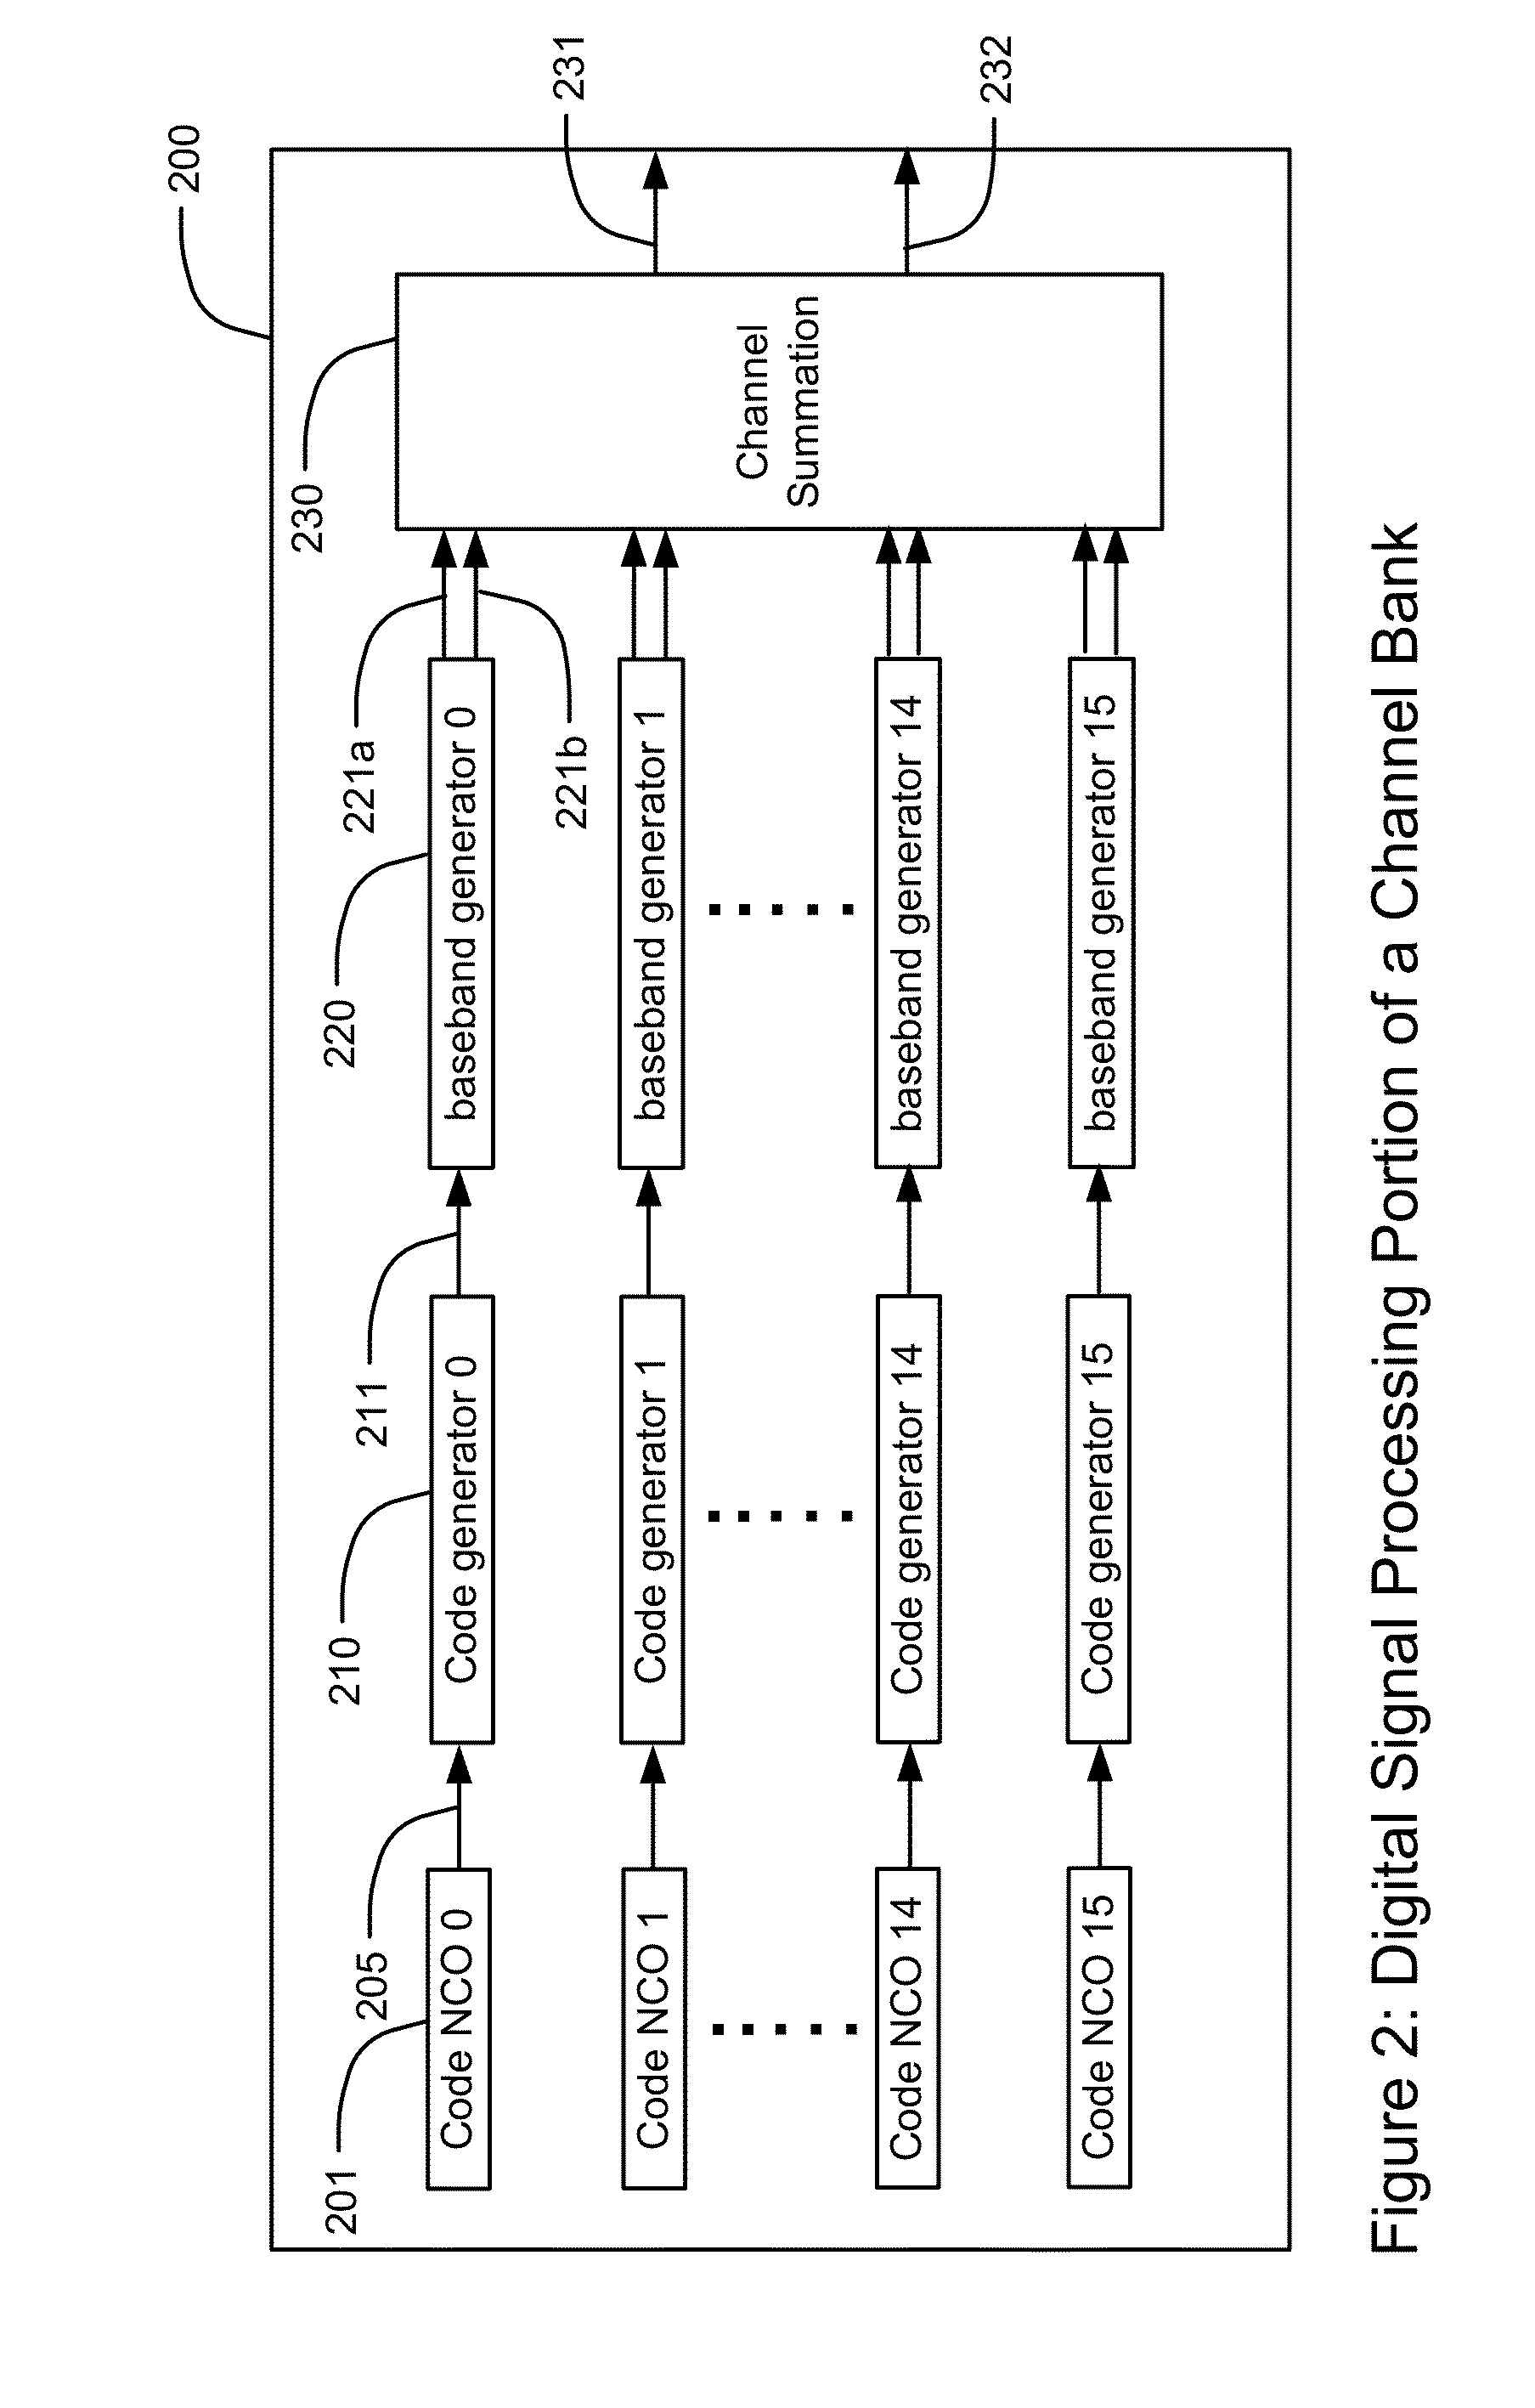 RF signal alignment calibration